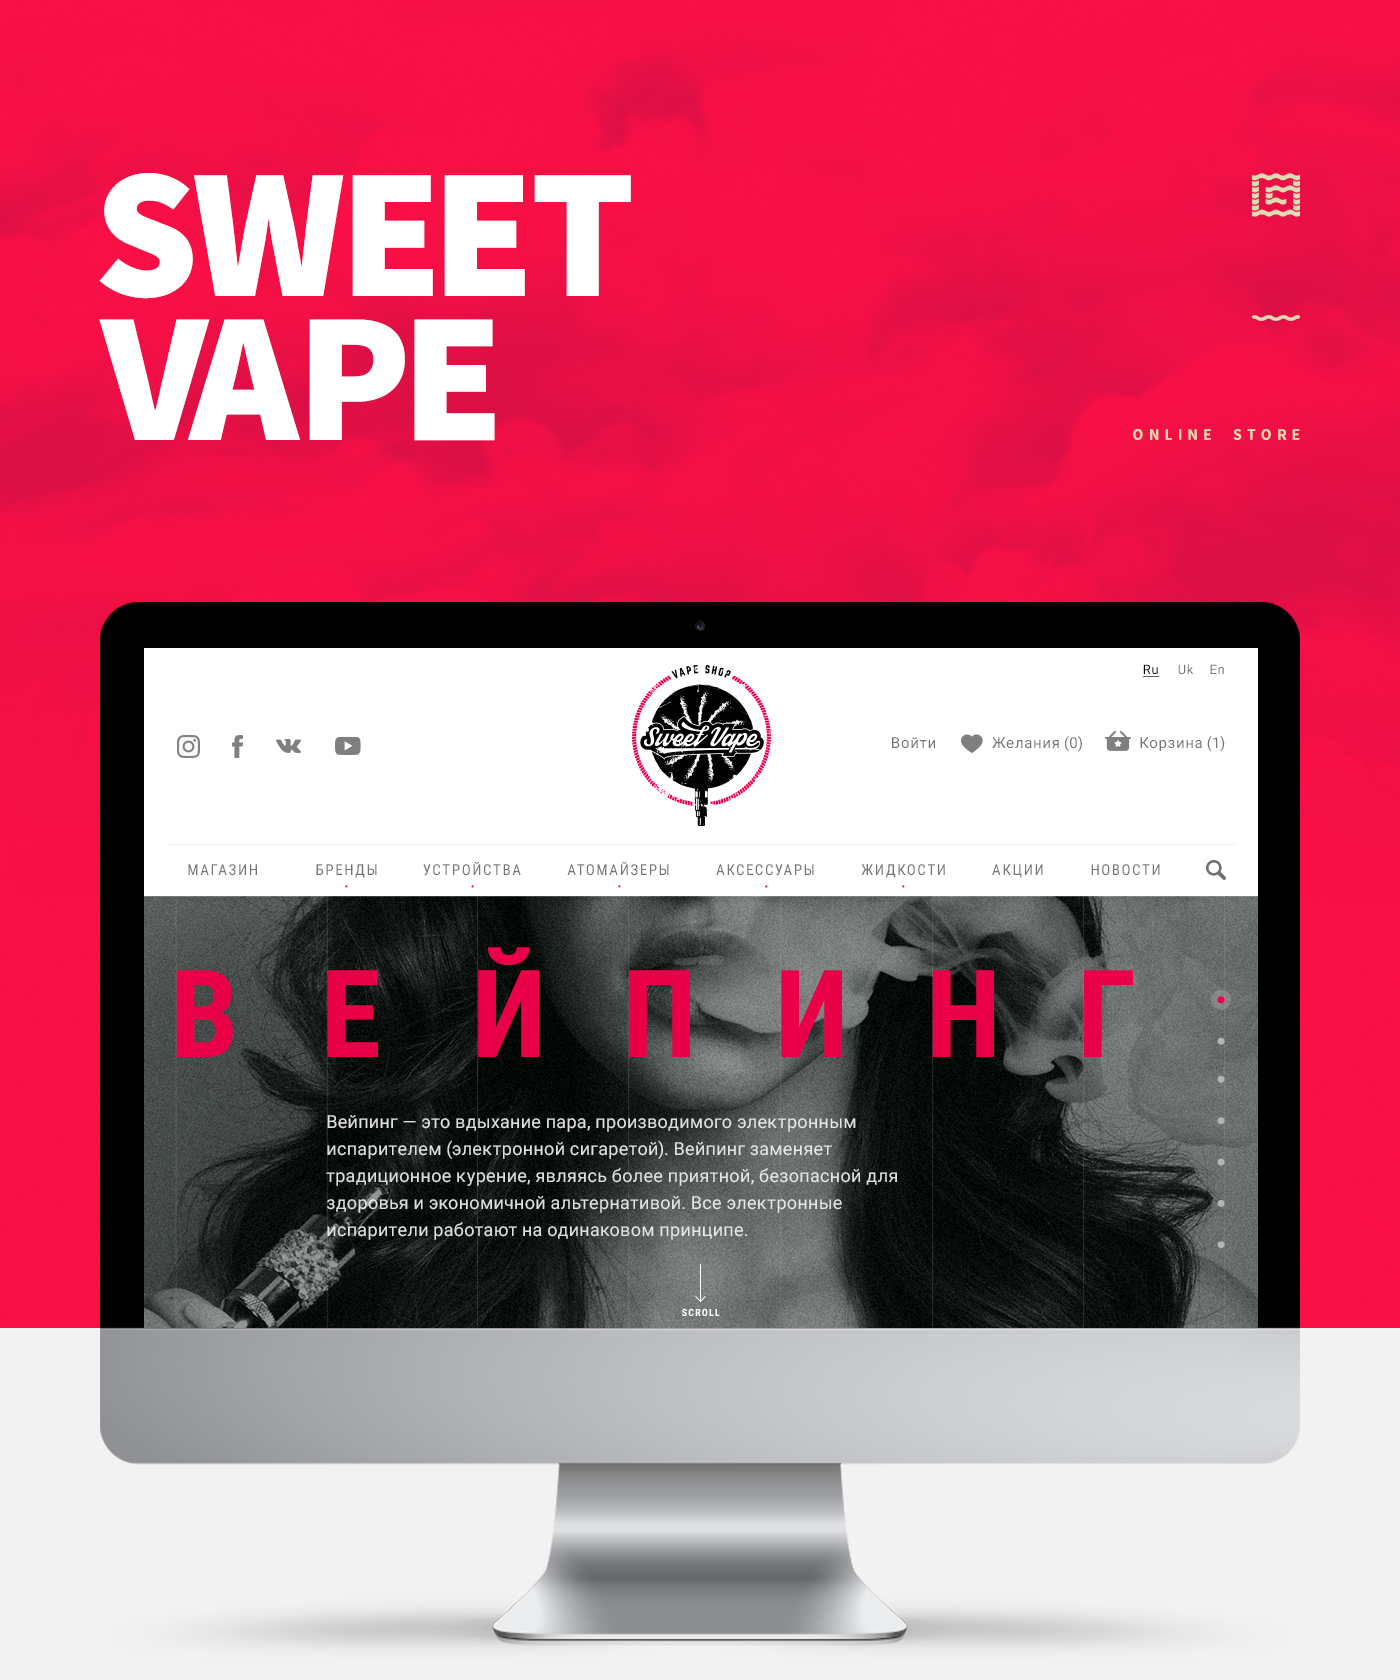 vaping Vape vapor electronic cigarettes storytelling   landing page online store business business card modular grid responcive design visual identity smoke sweet clean